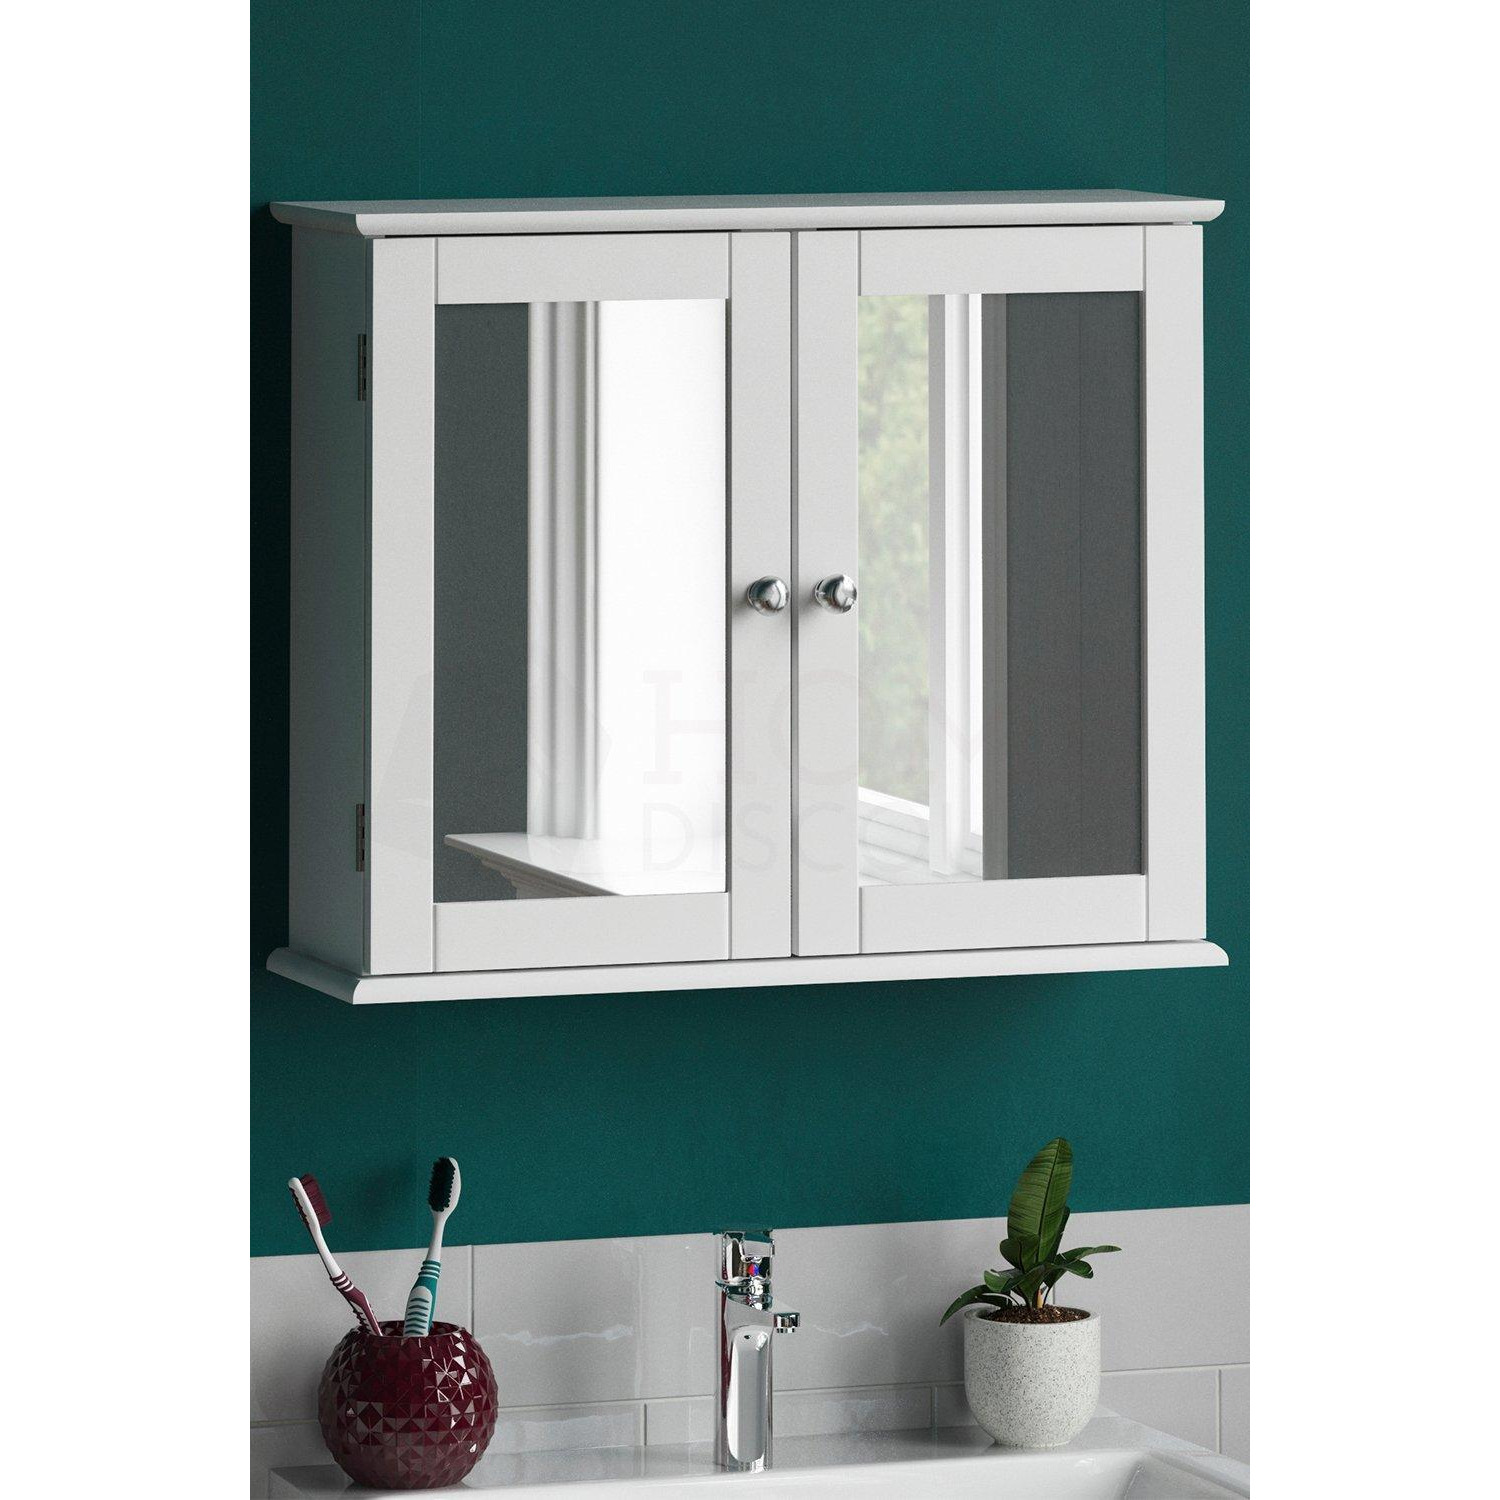 Bath Vida Priano 2 Door Mirrored Wall Mounted Cabinet With Shelves Bathroom Storage 470 x 570 x 180 mm - image 1